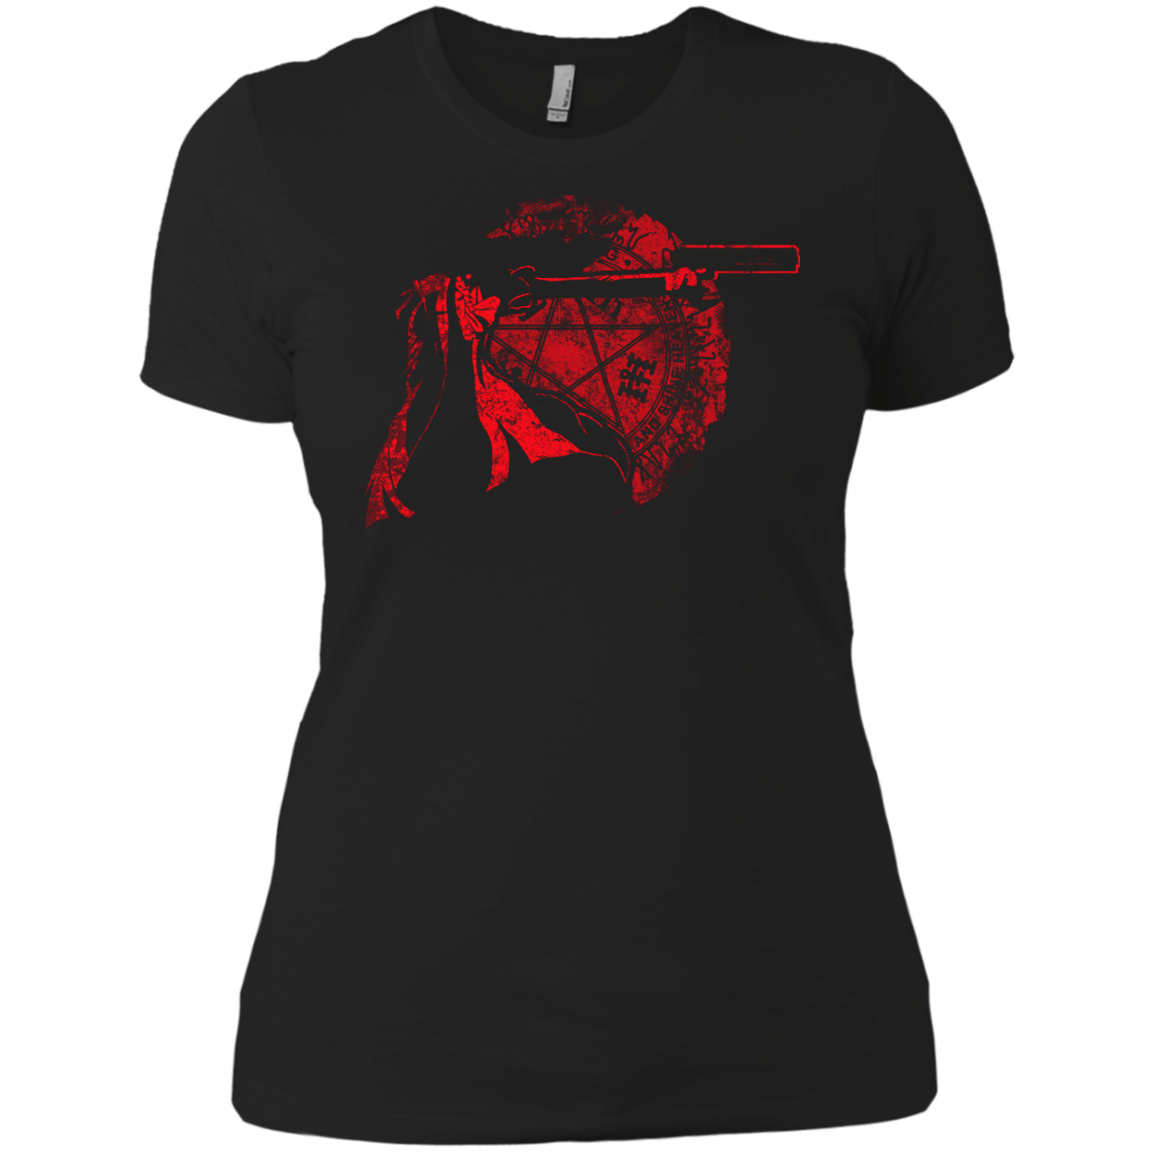 Hell Singer Women's Premium T-Shirt